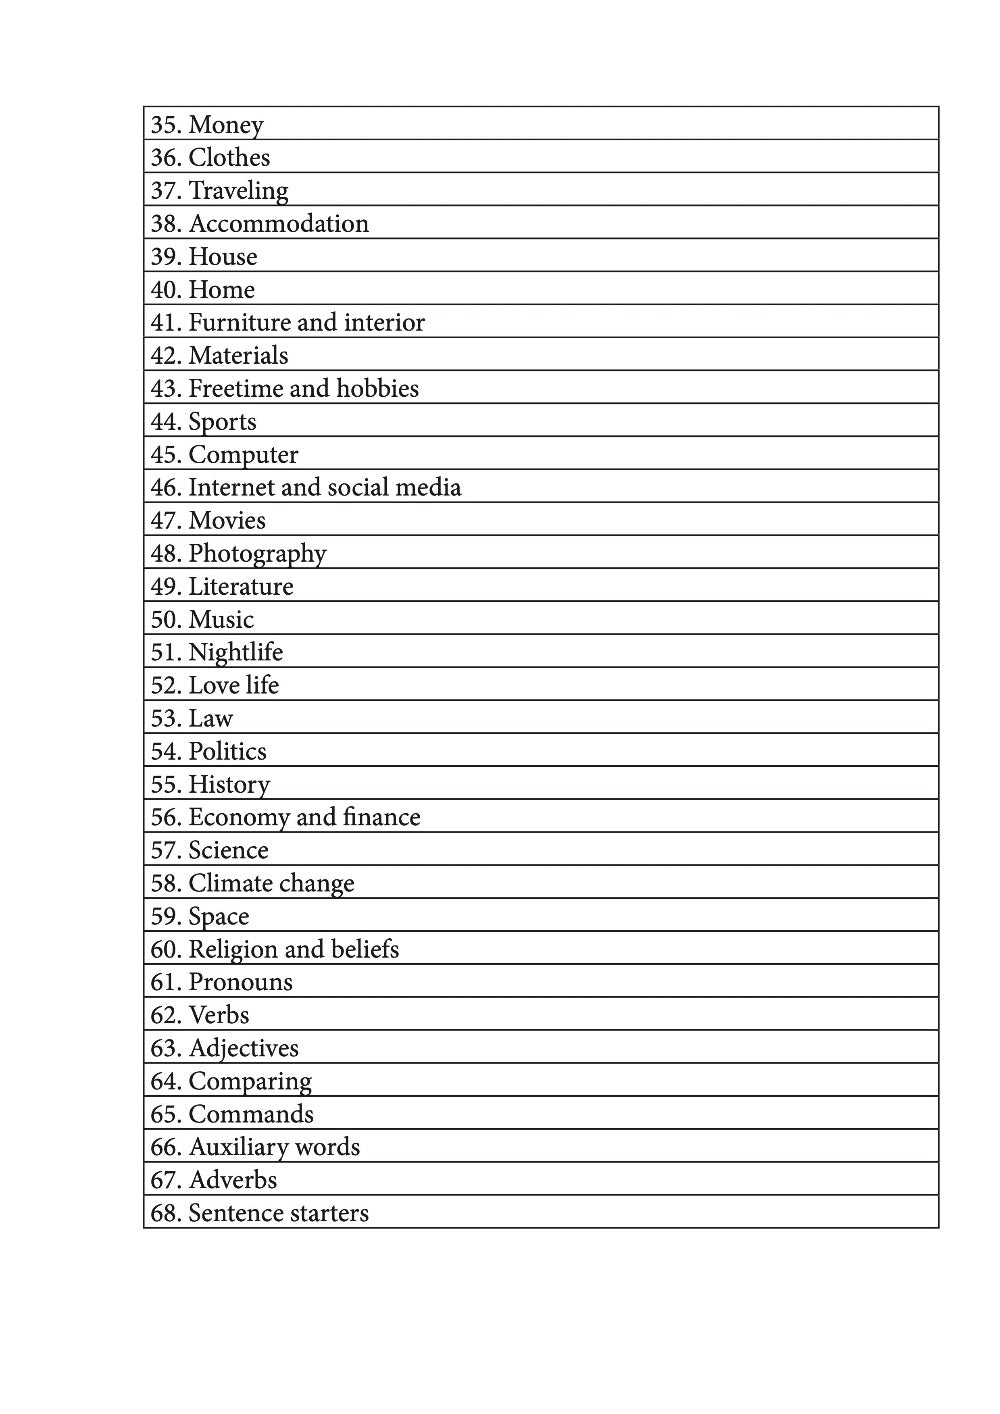 Moksha language learning notebook contents page 2